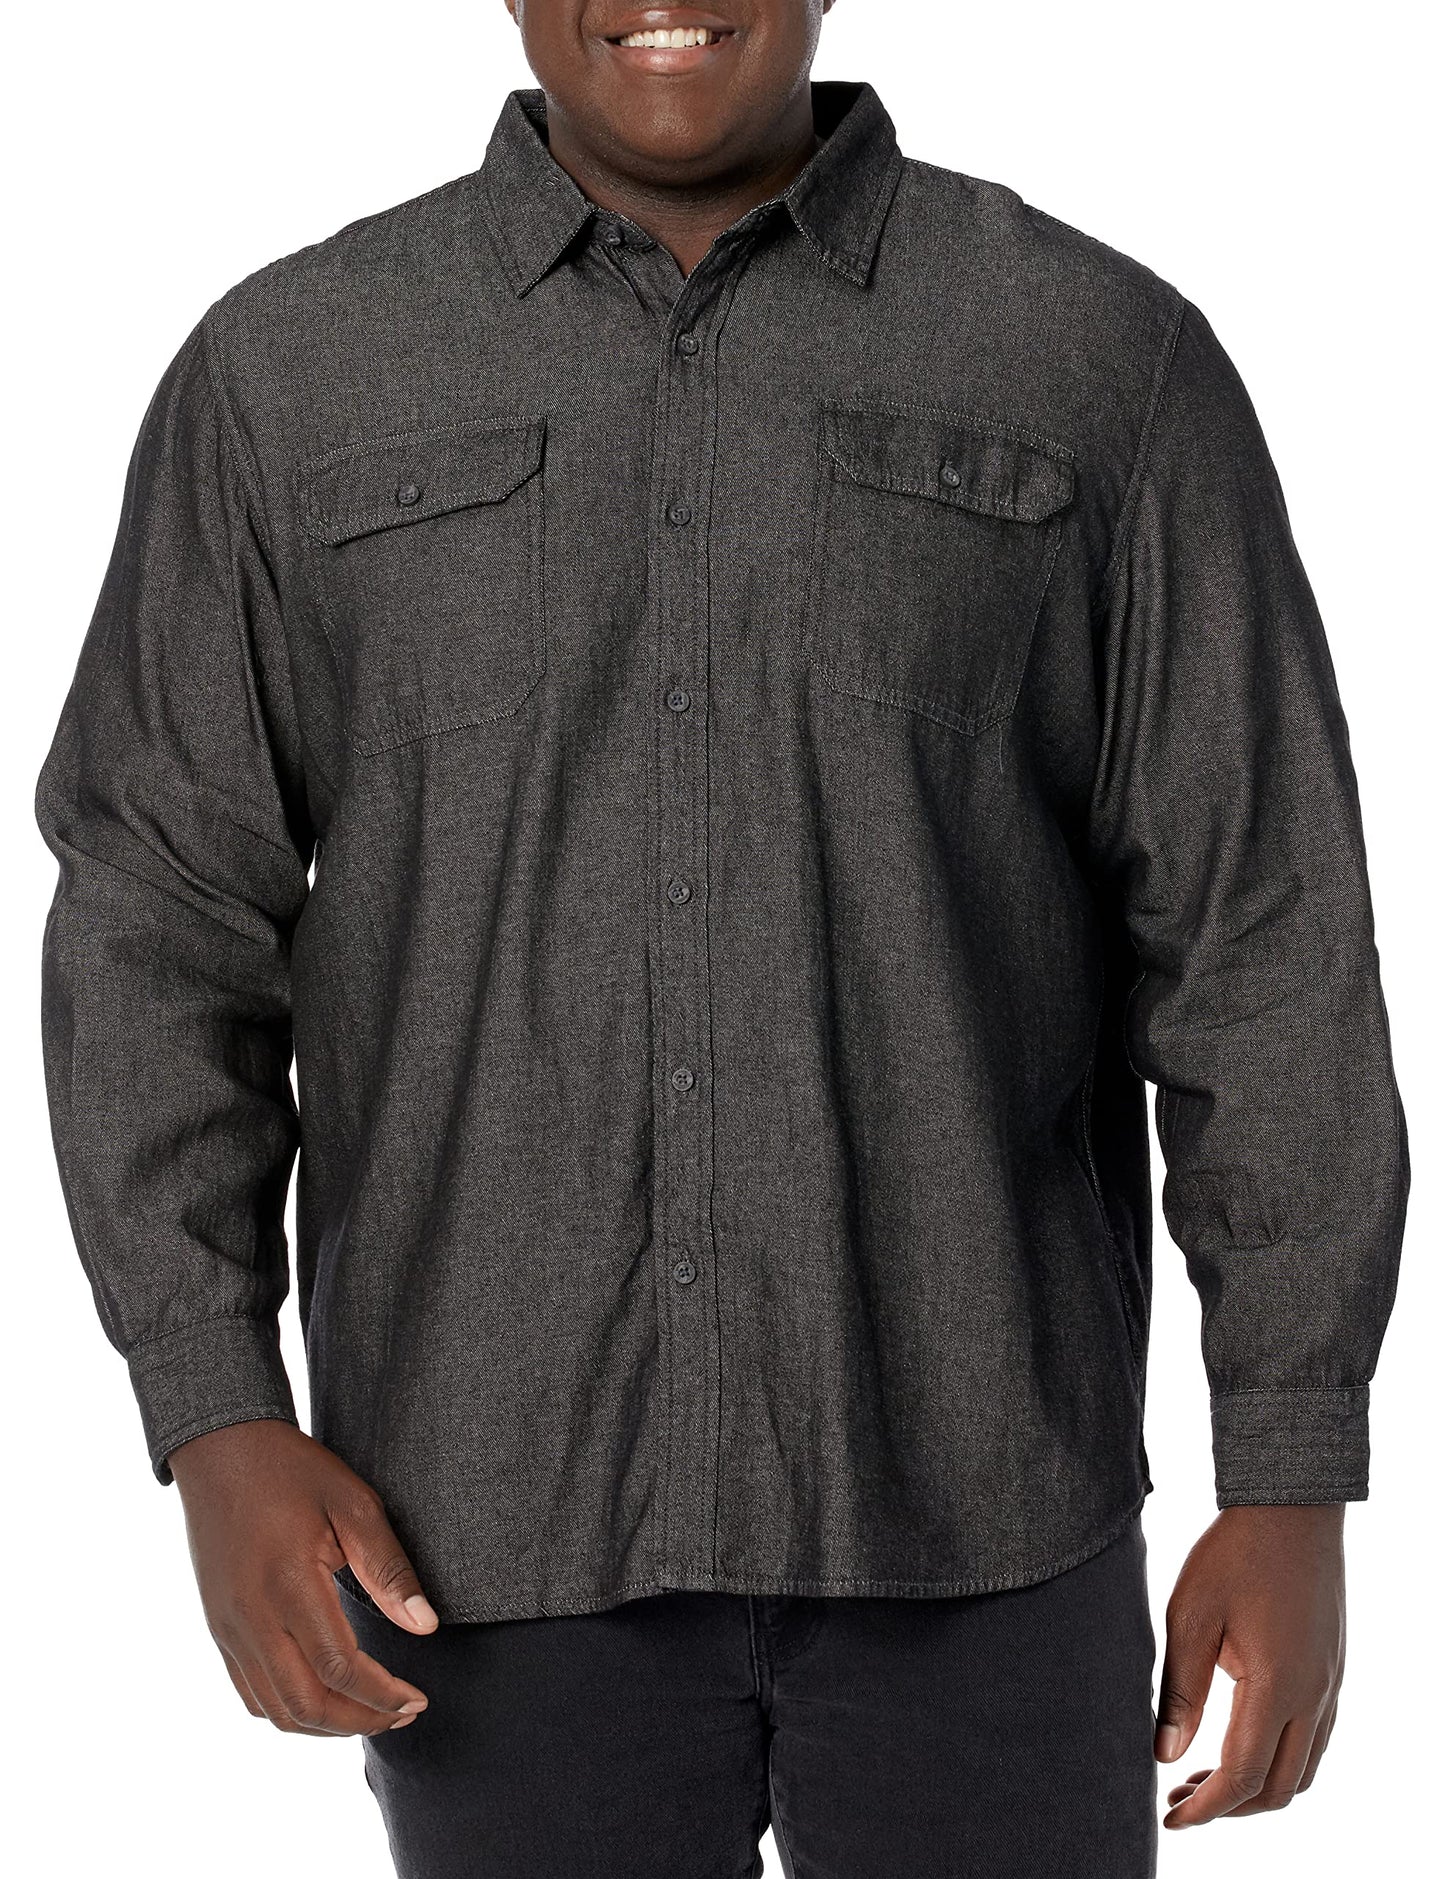 Wrangler Authentics Men's Long Sleeve Classic Woven Shirt, Black Denim, XX-Large